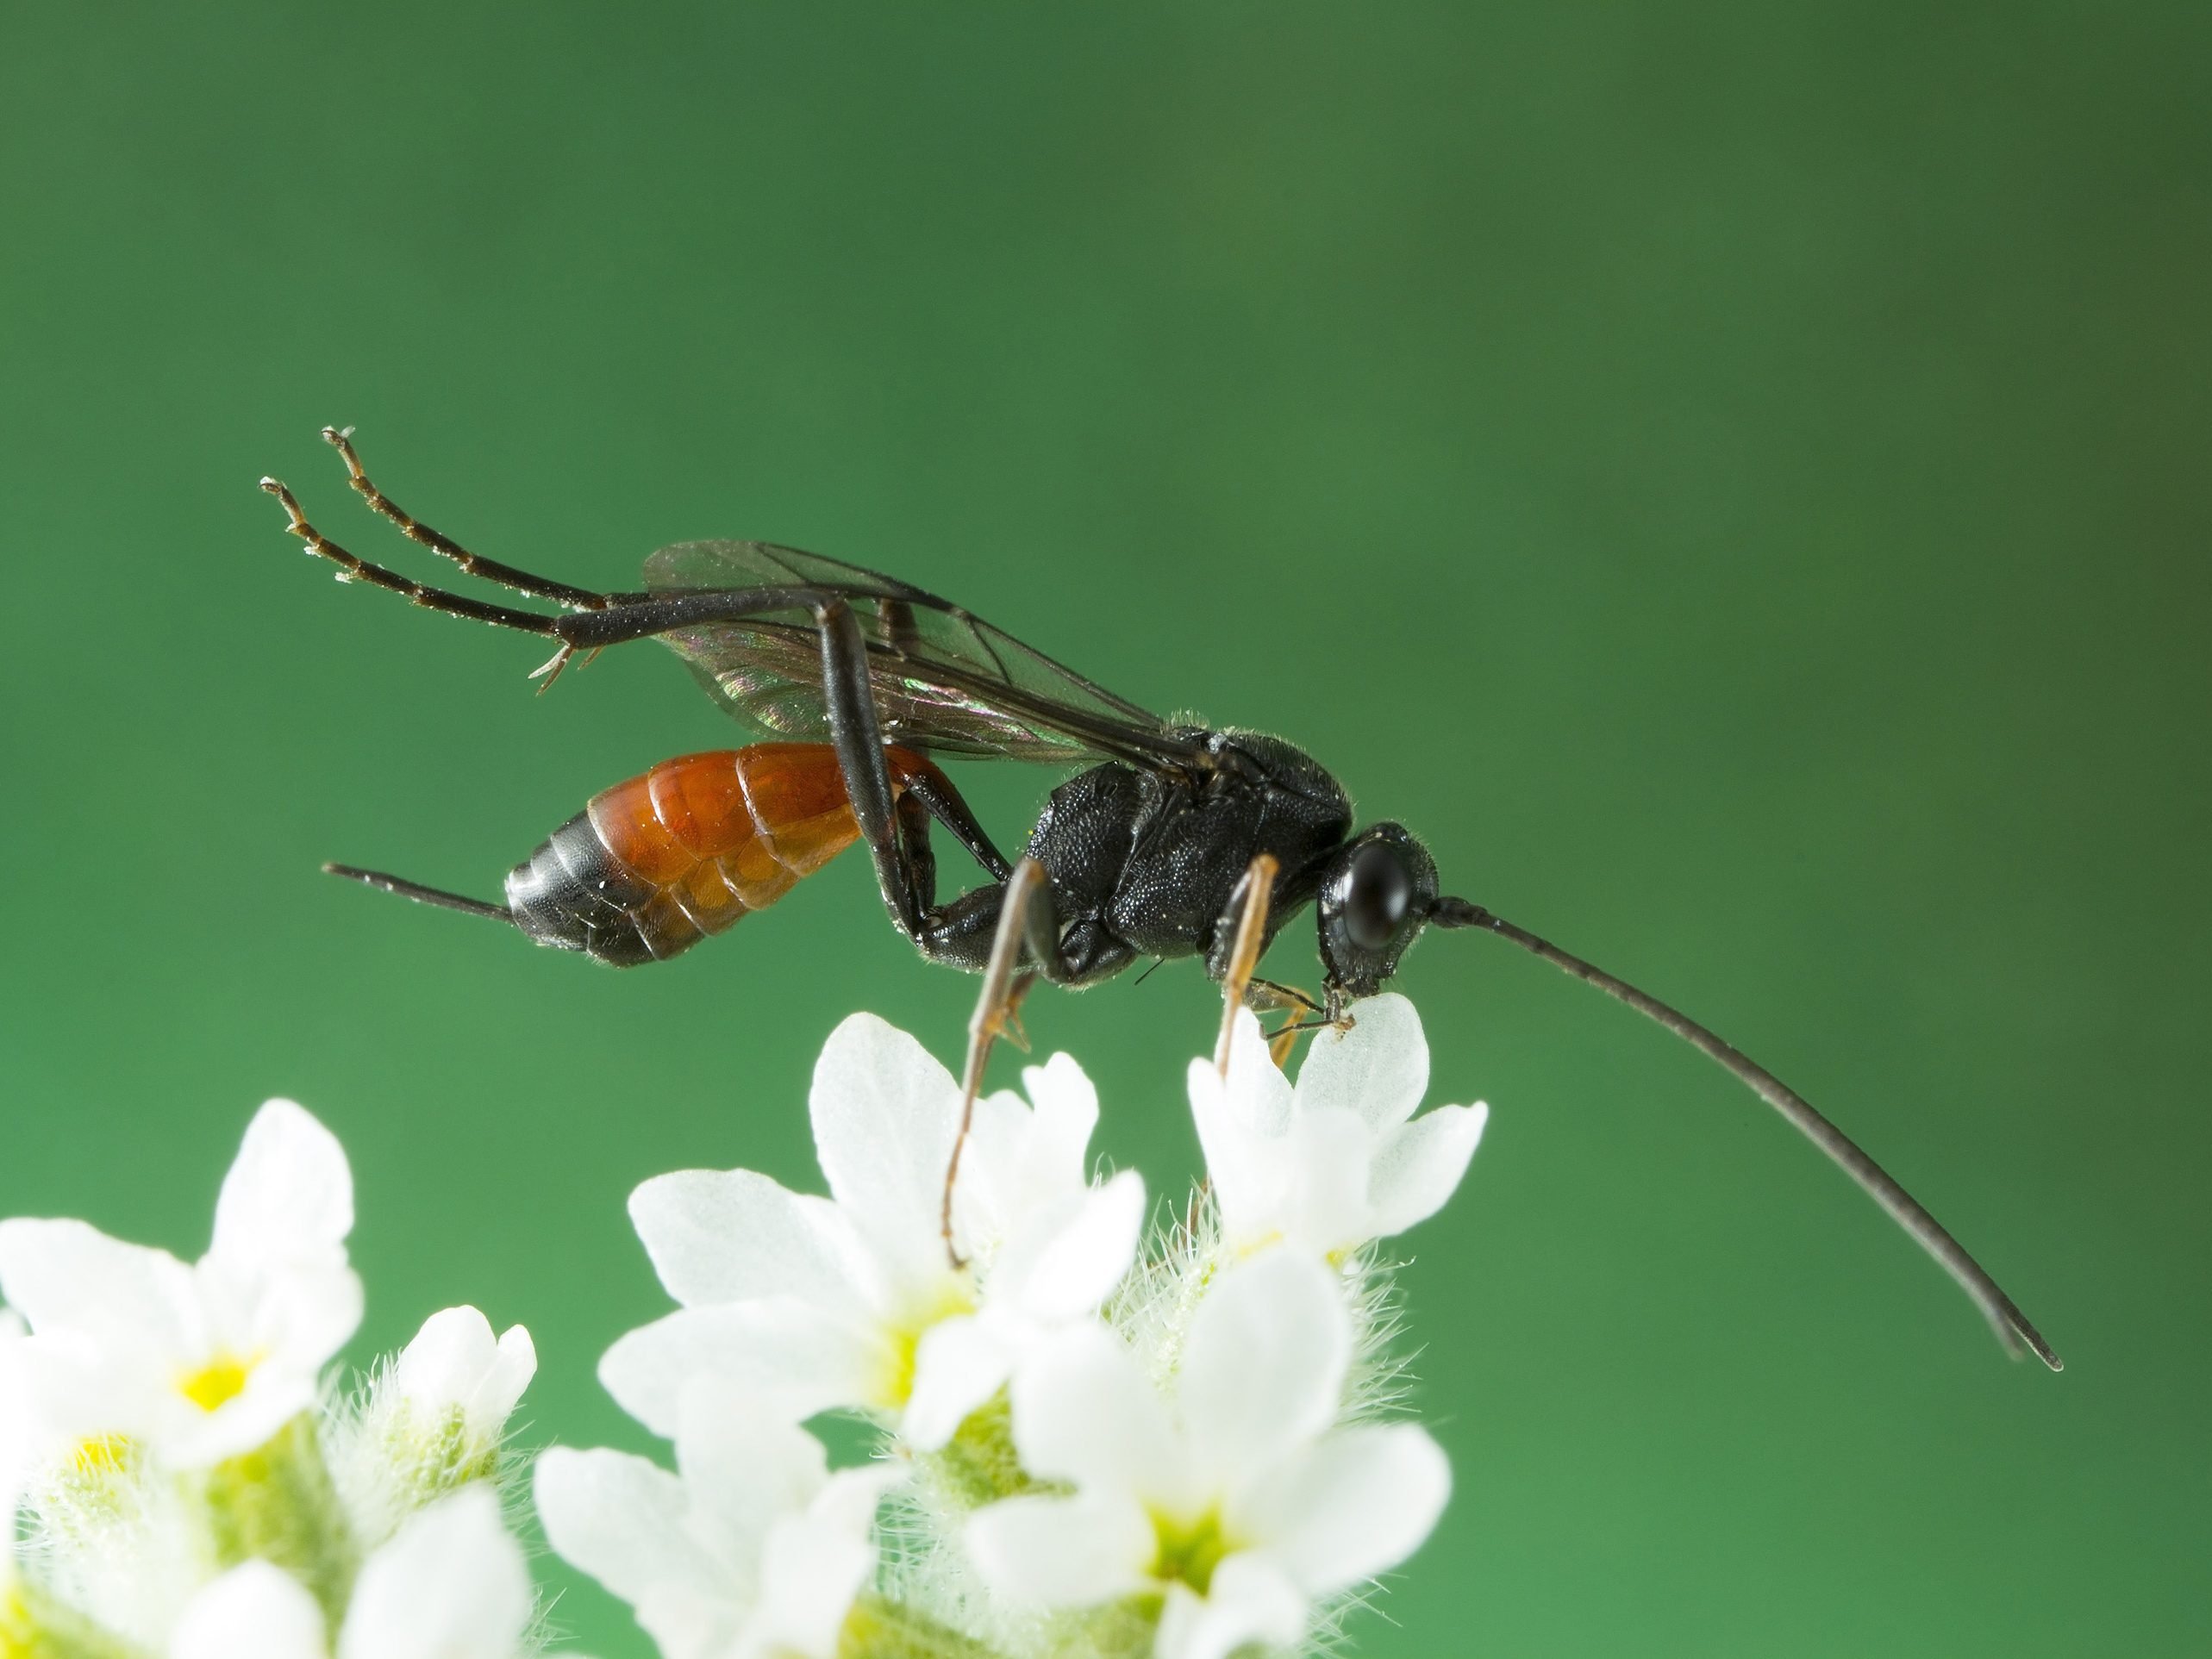 6. Parasitic Wasps